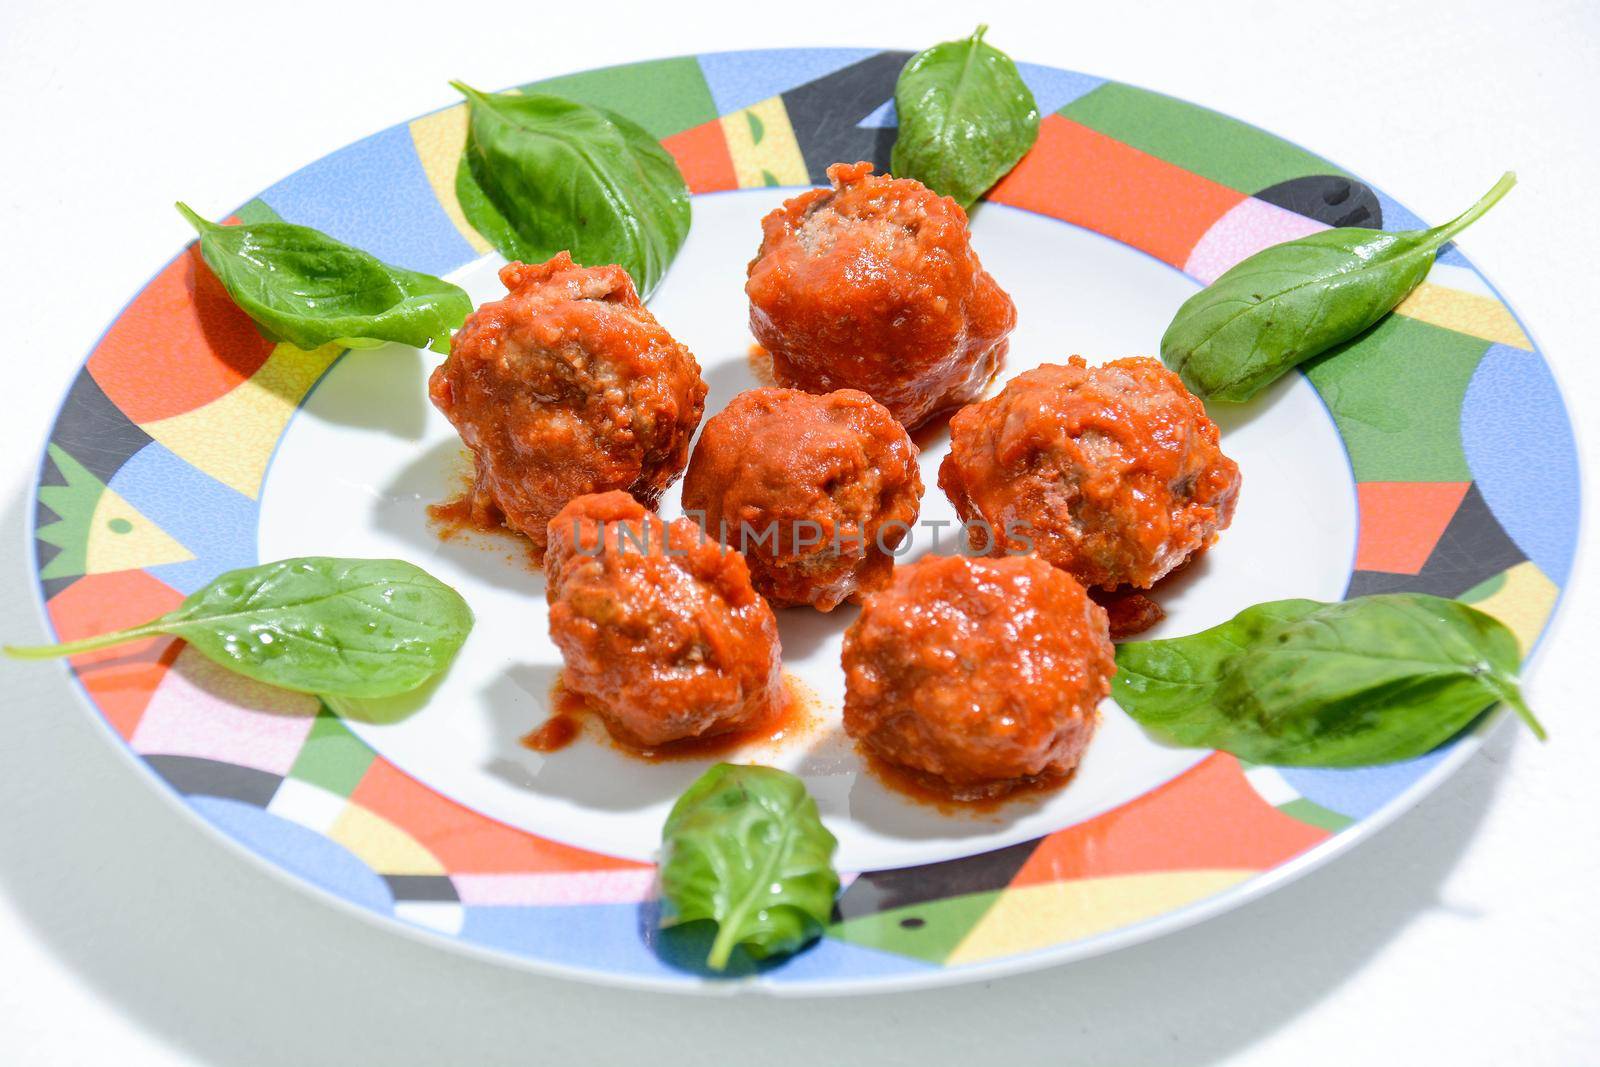 Meatballs Italian fine cuisine with tomato sauce